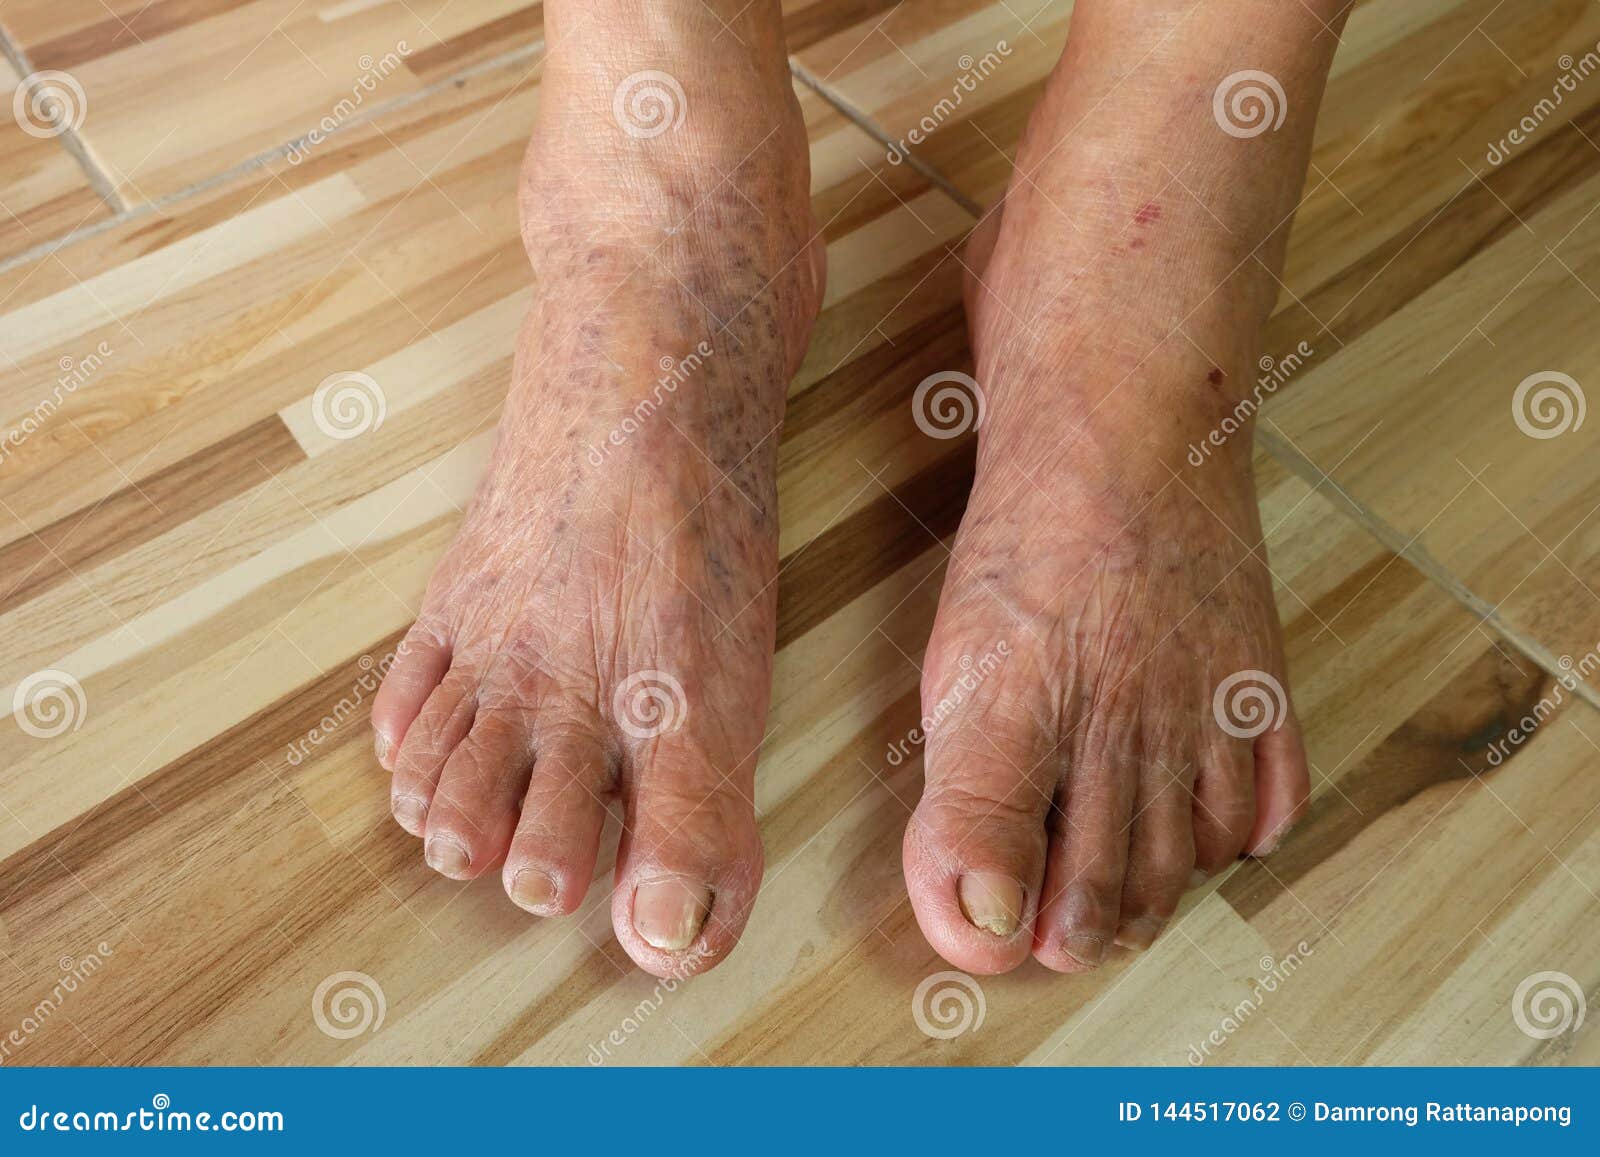 review-uri varicose feet